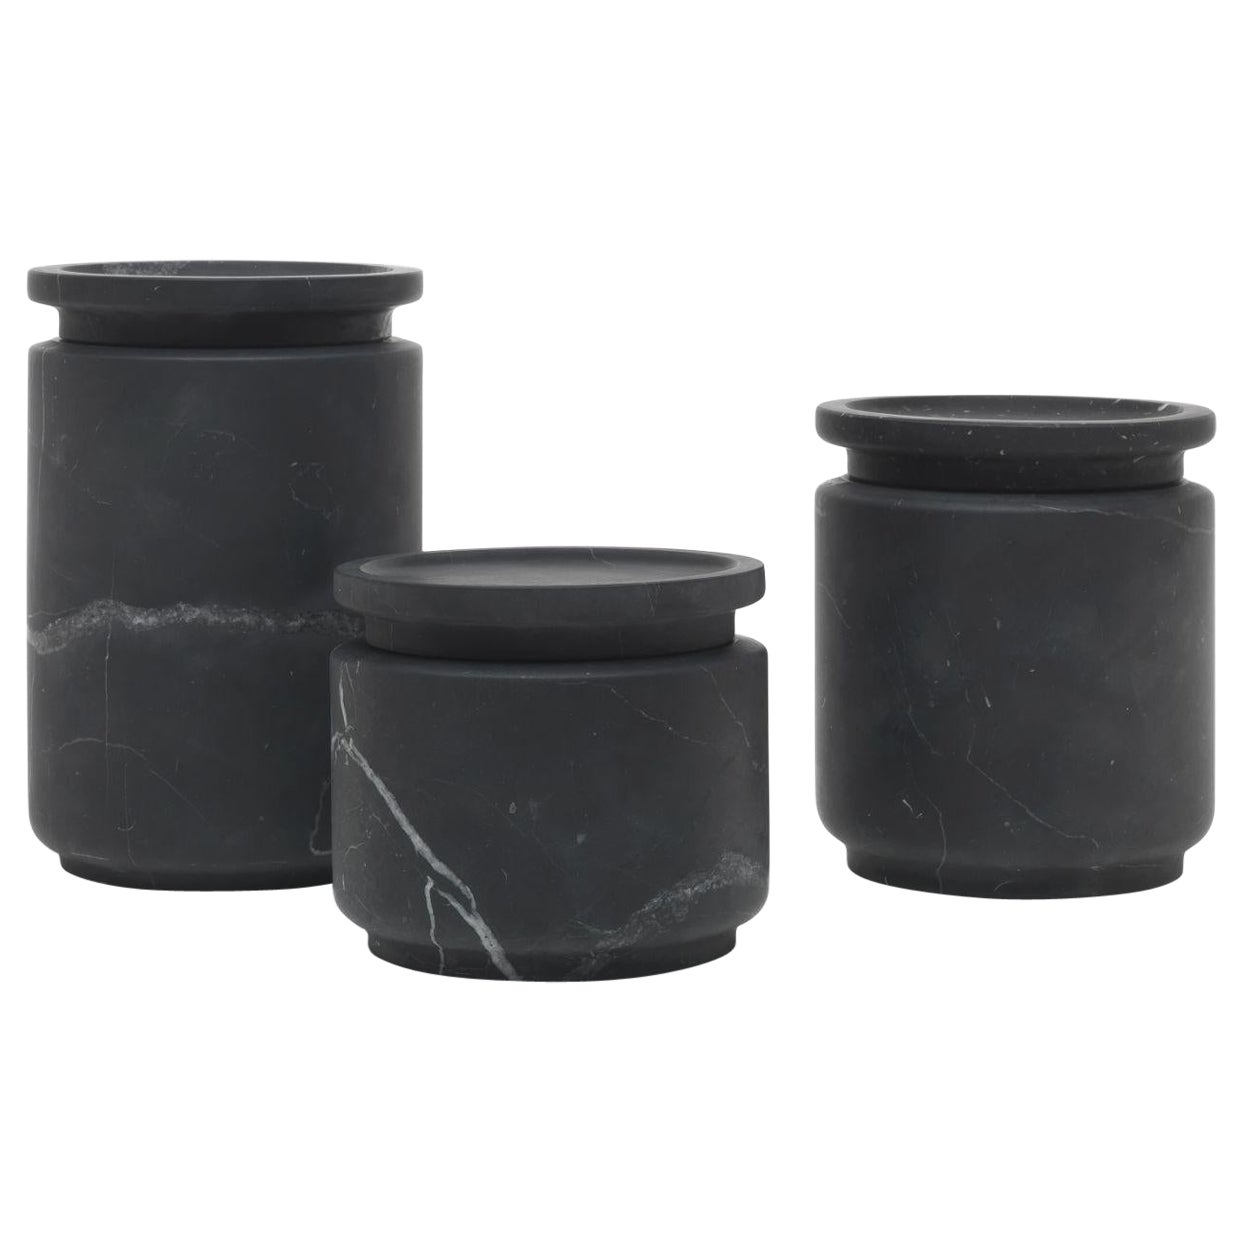 A Set of 3 Pyxis Pots, Black by Ivan Colominas